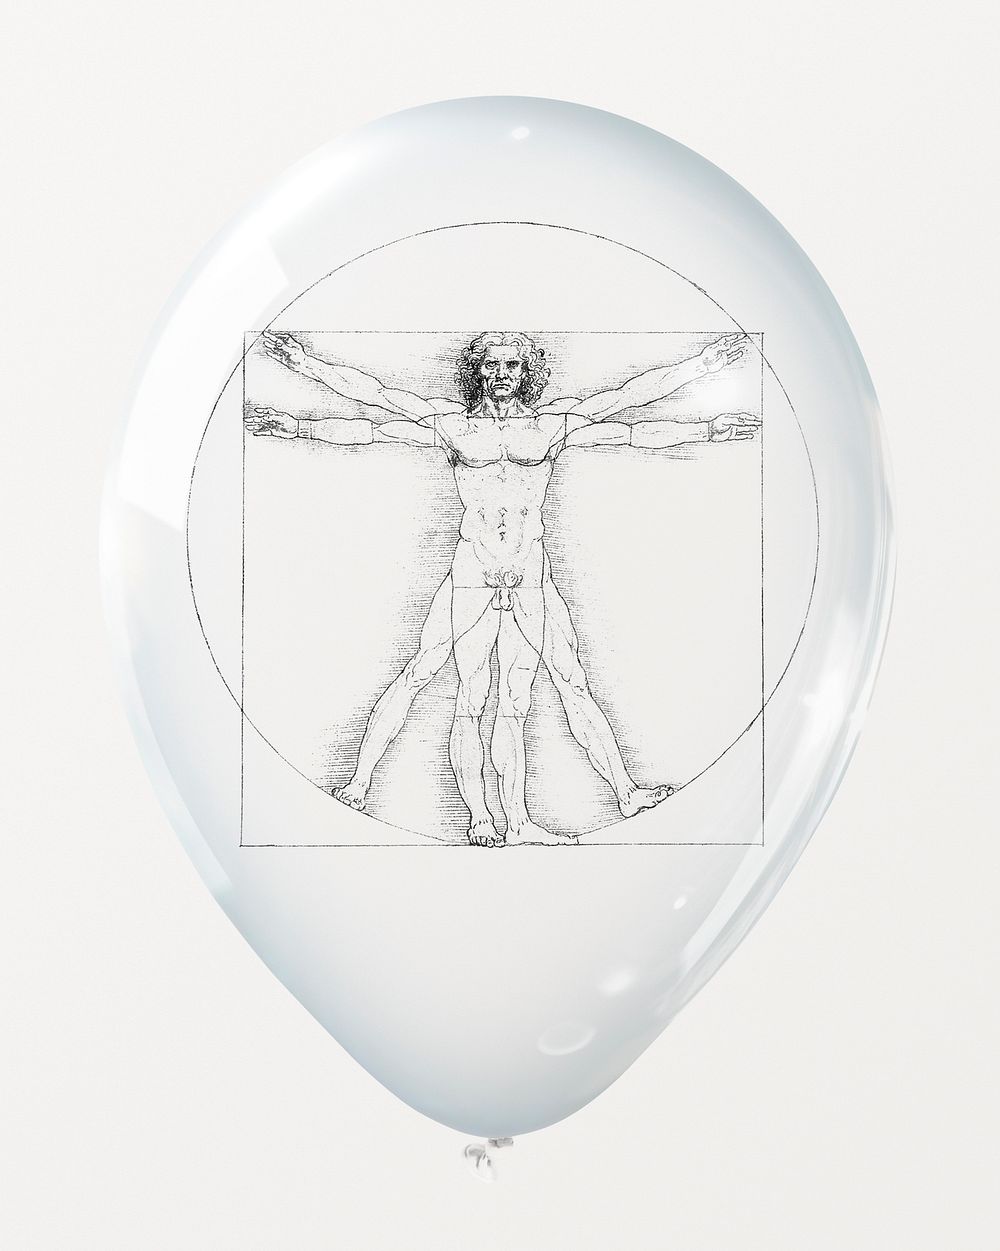 Vitruvian man in clear balloon, Leonardo da Vinci's famous artwork, remixed by rawpixel